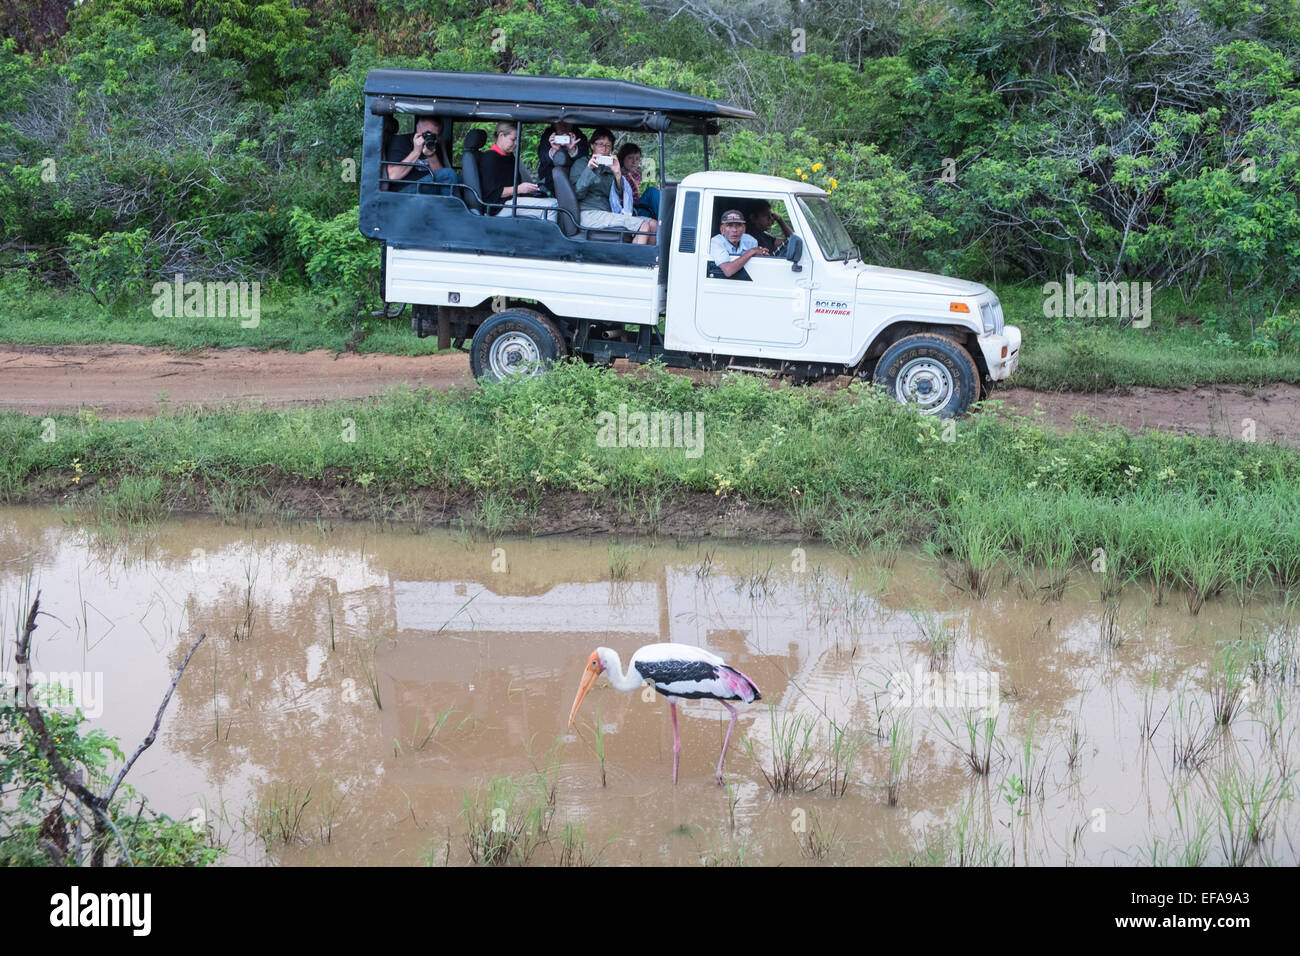 Tourists in jeeps traffic jams while chasing wildlife,especially leopards,painted stork,vehicles.Yala National Park,Sri Lanka. Stock Photo